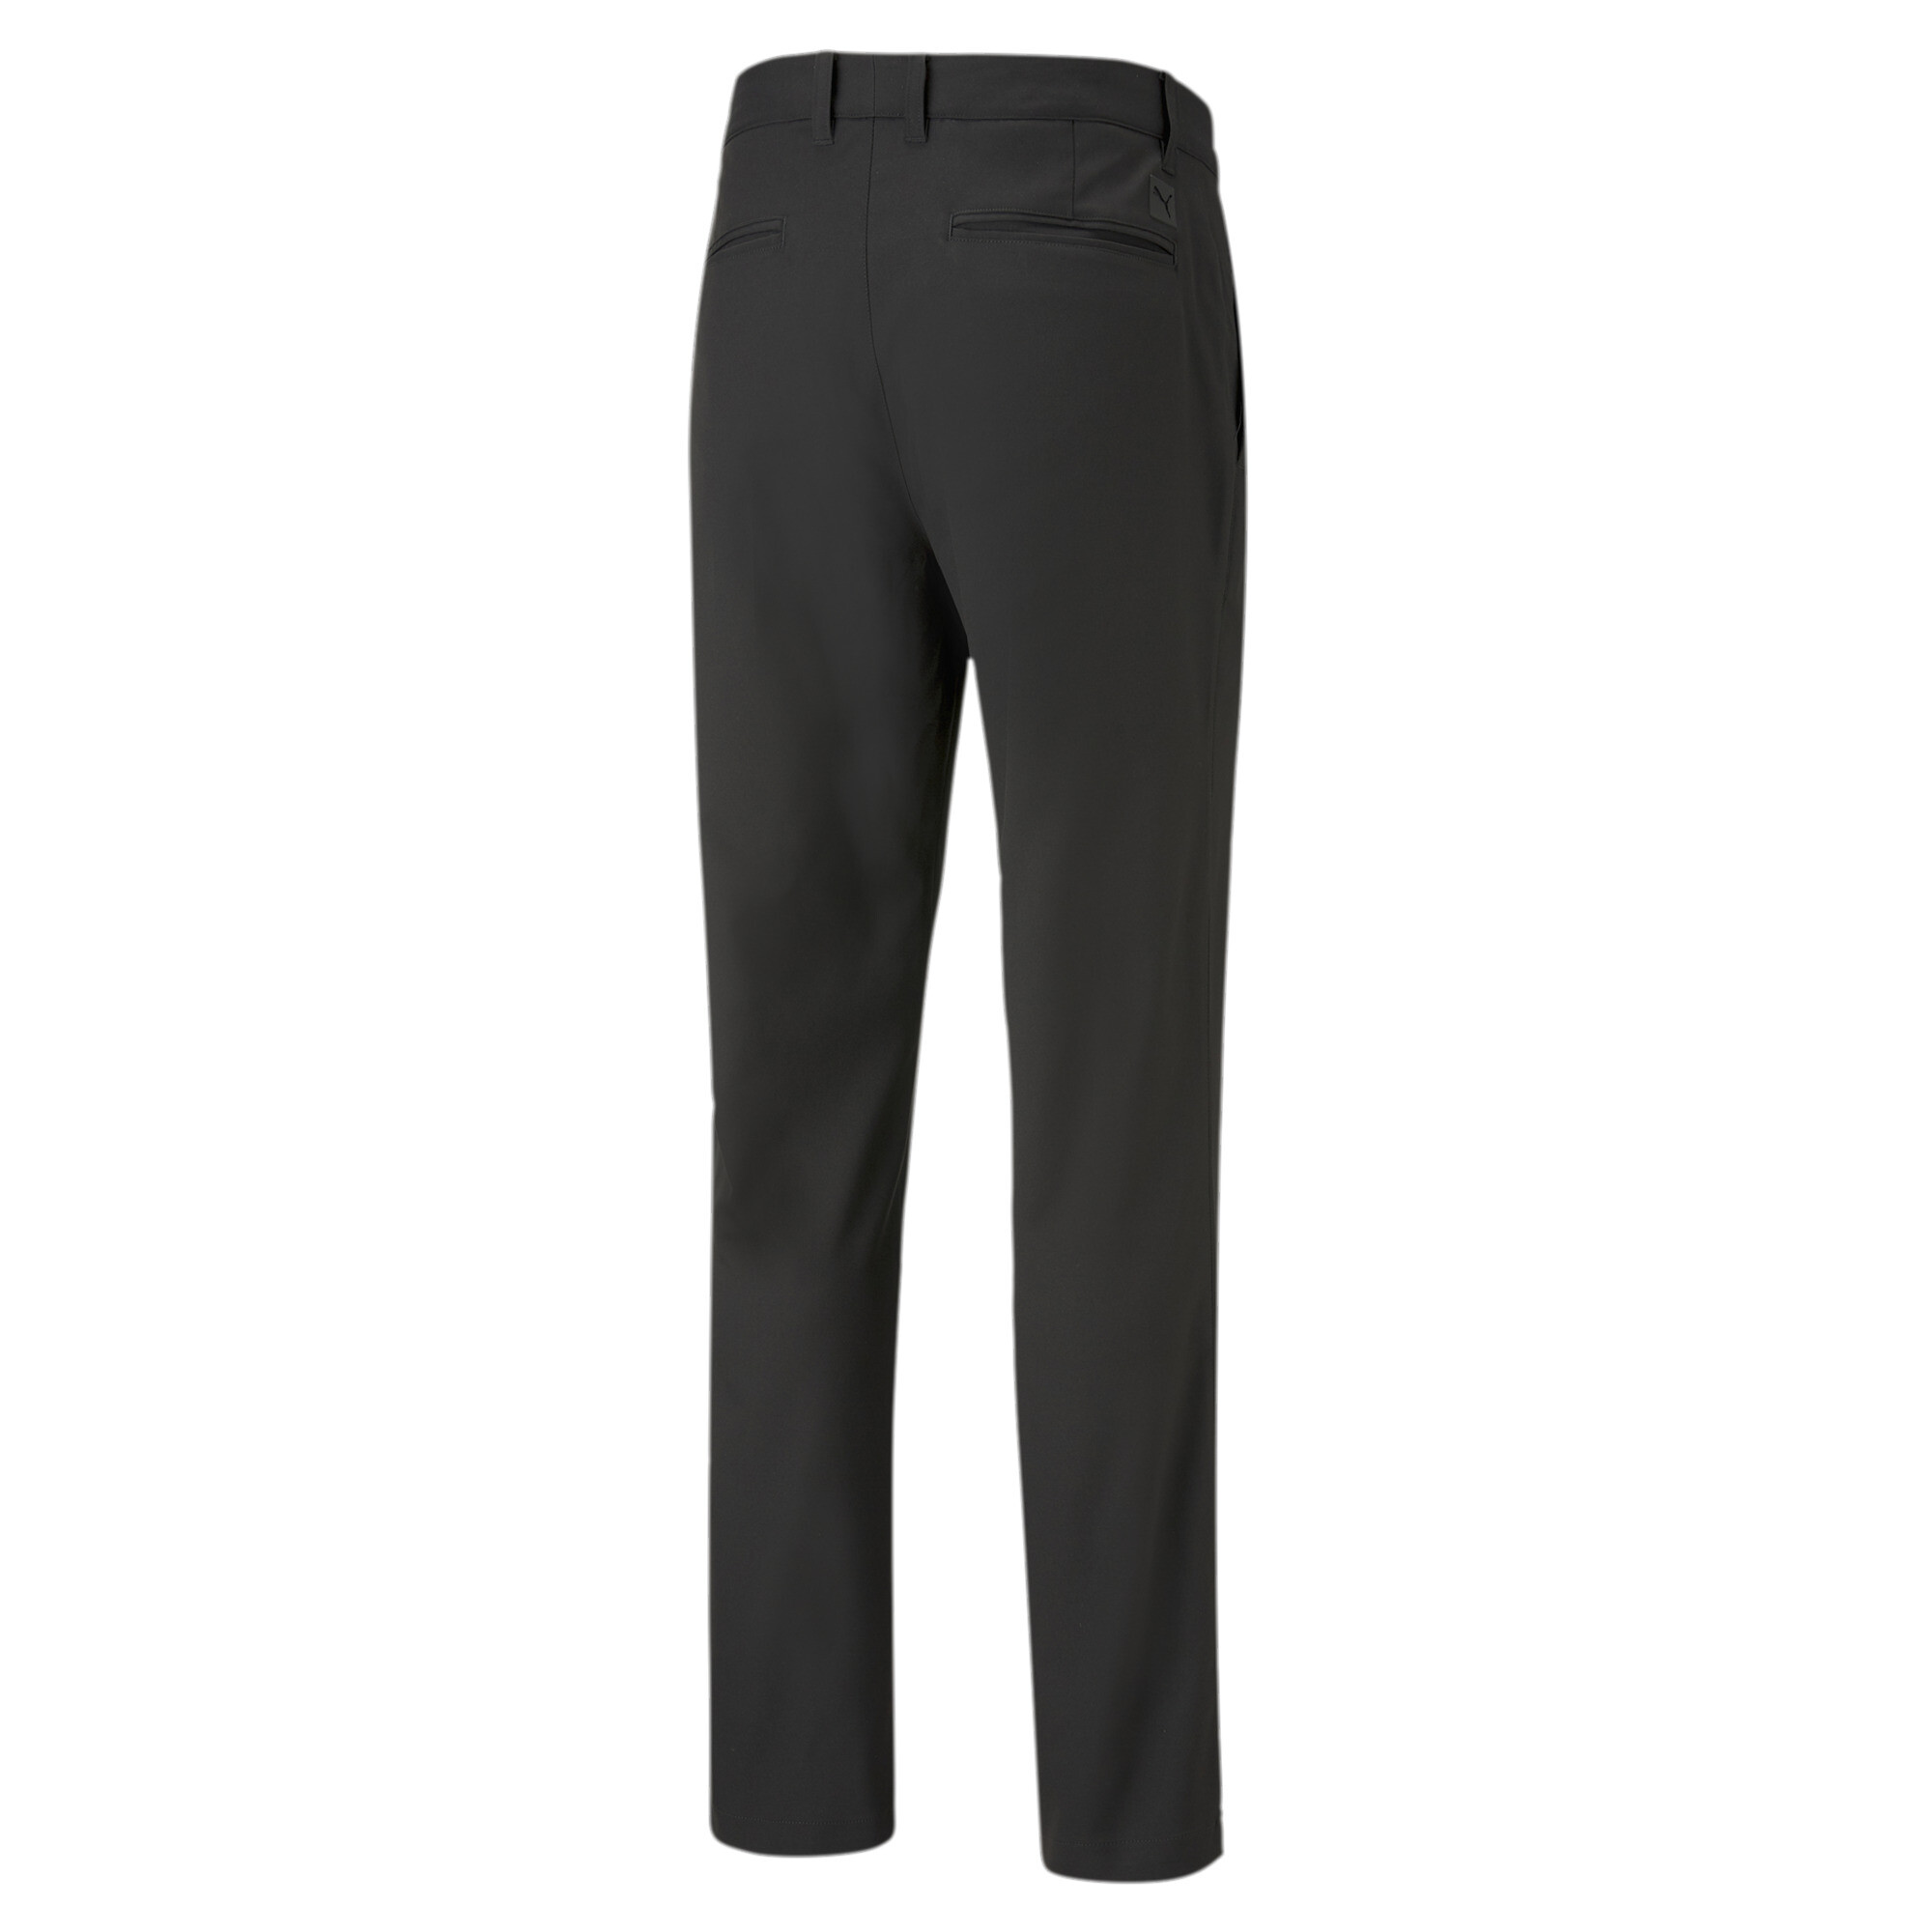 Men's Puma Dealer Golf Pants, Black, Size 28/32, Clothing